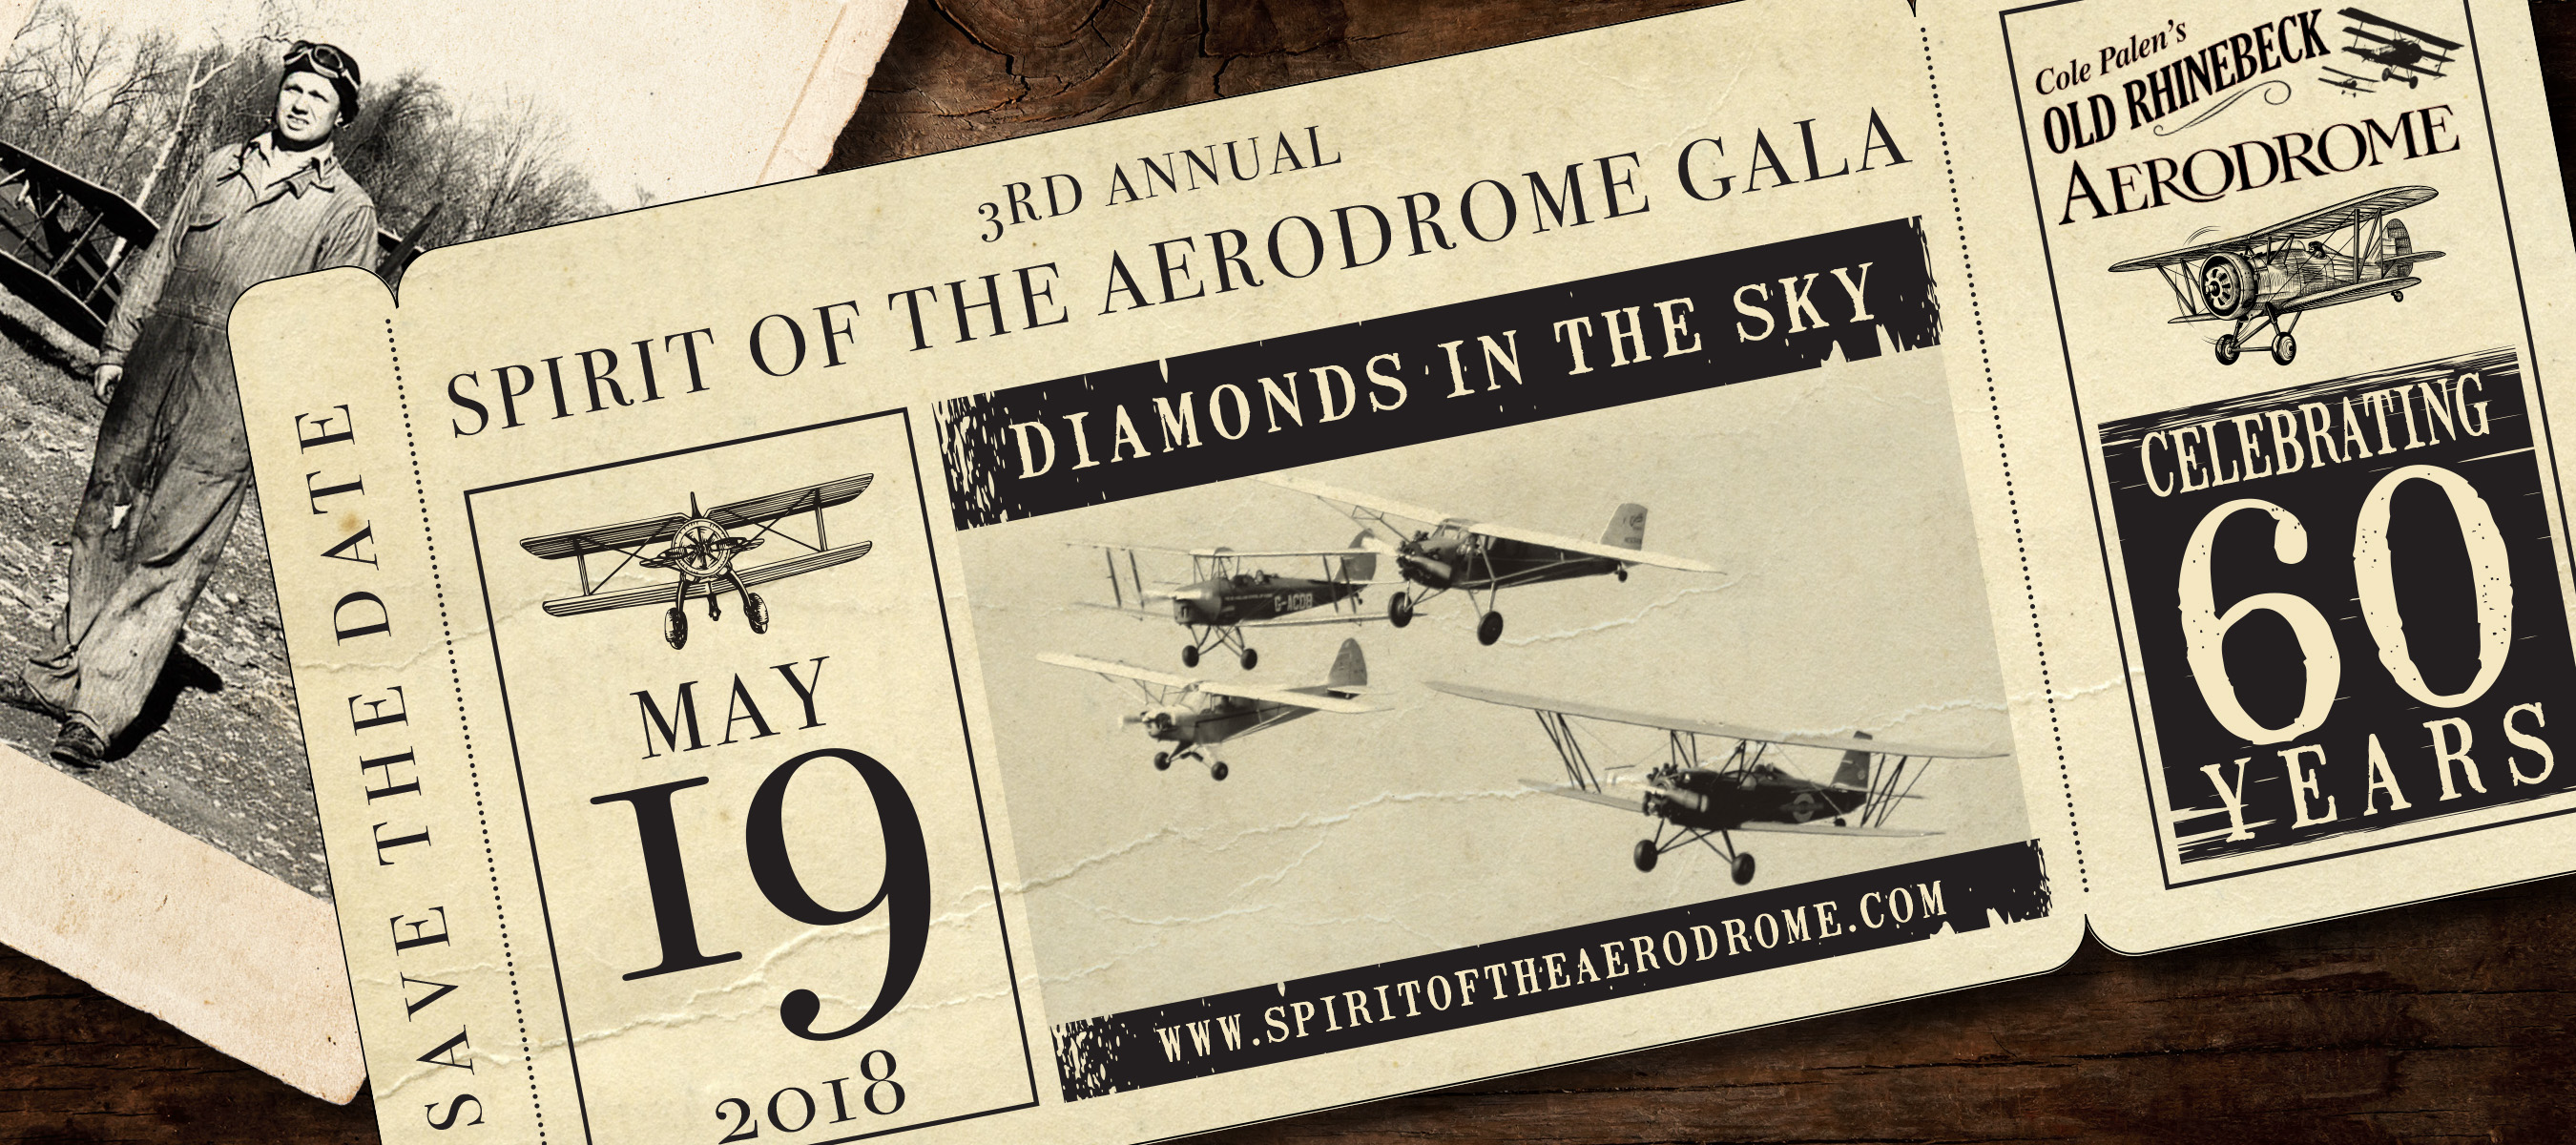 Old Rhinebeck Aerodrome to Celebrate Diamond Jubilee at the Spirit of the Aerodrome Gala